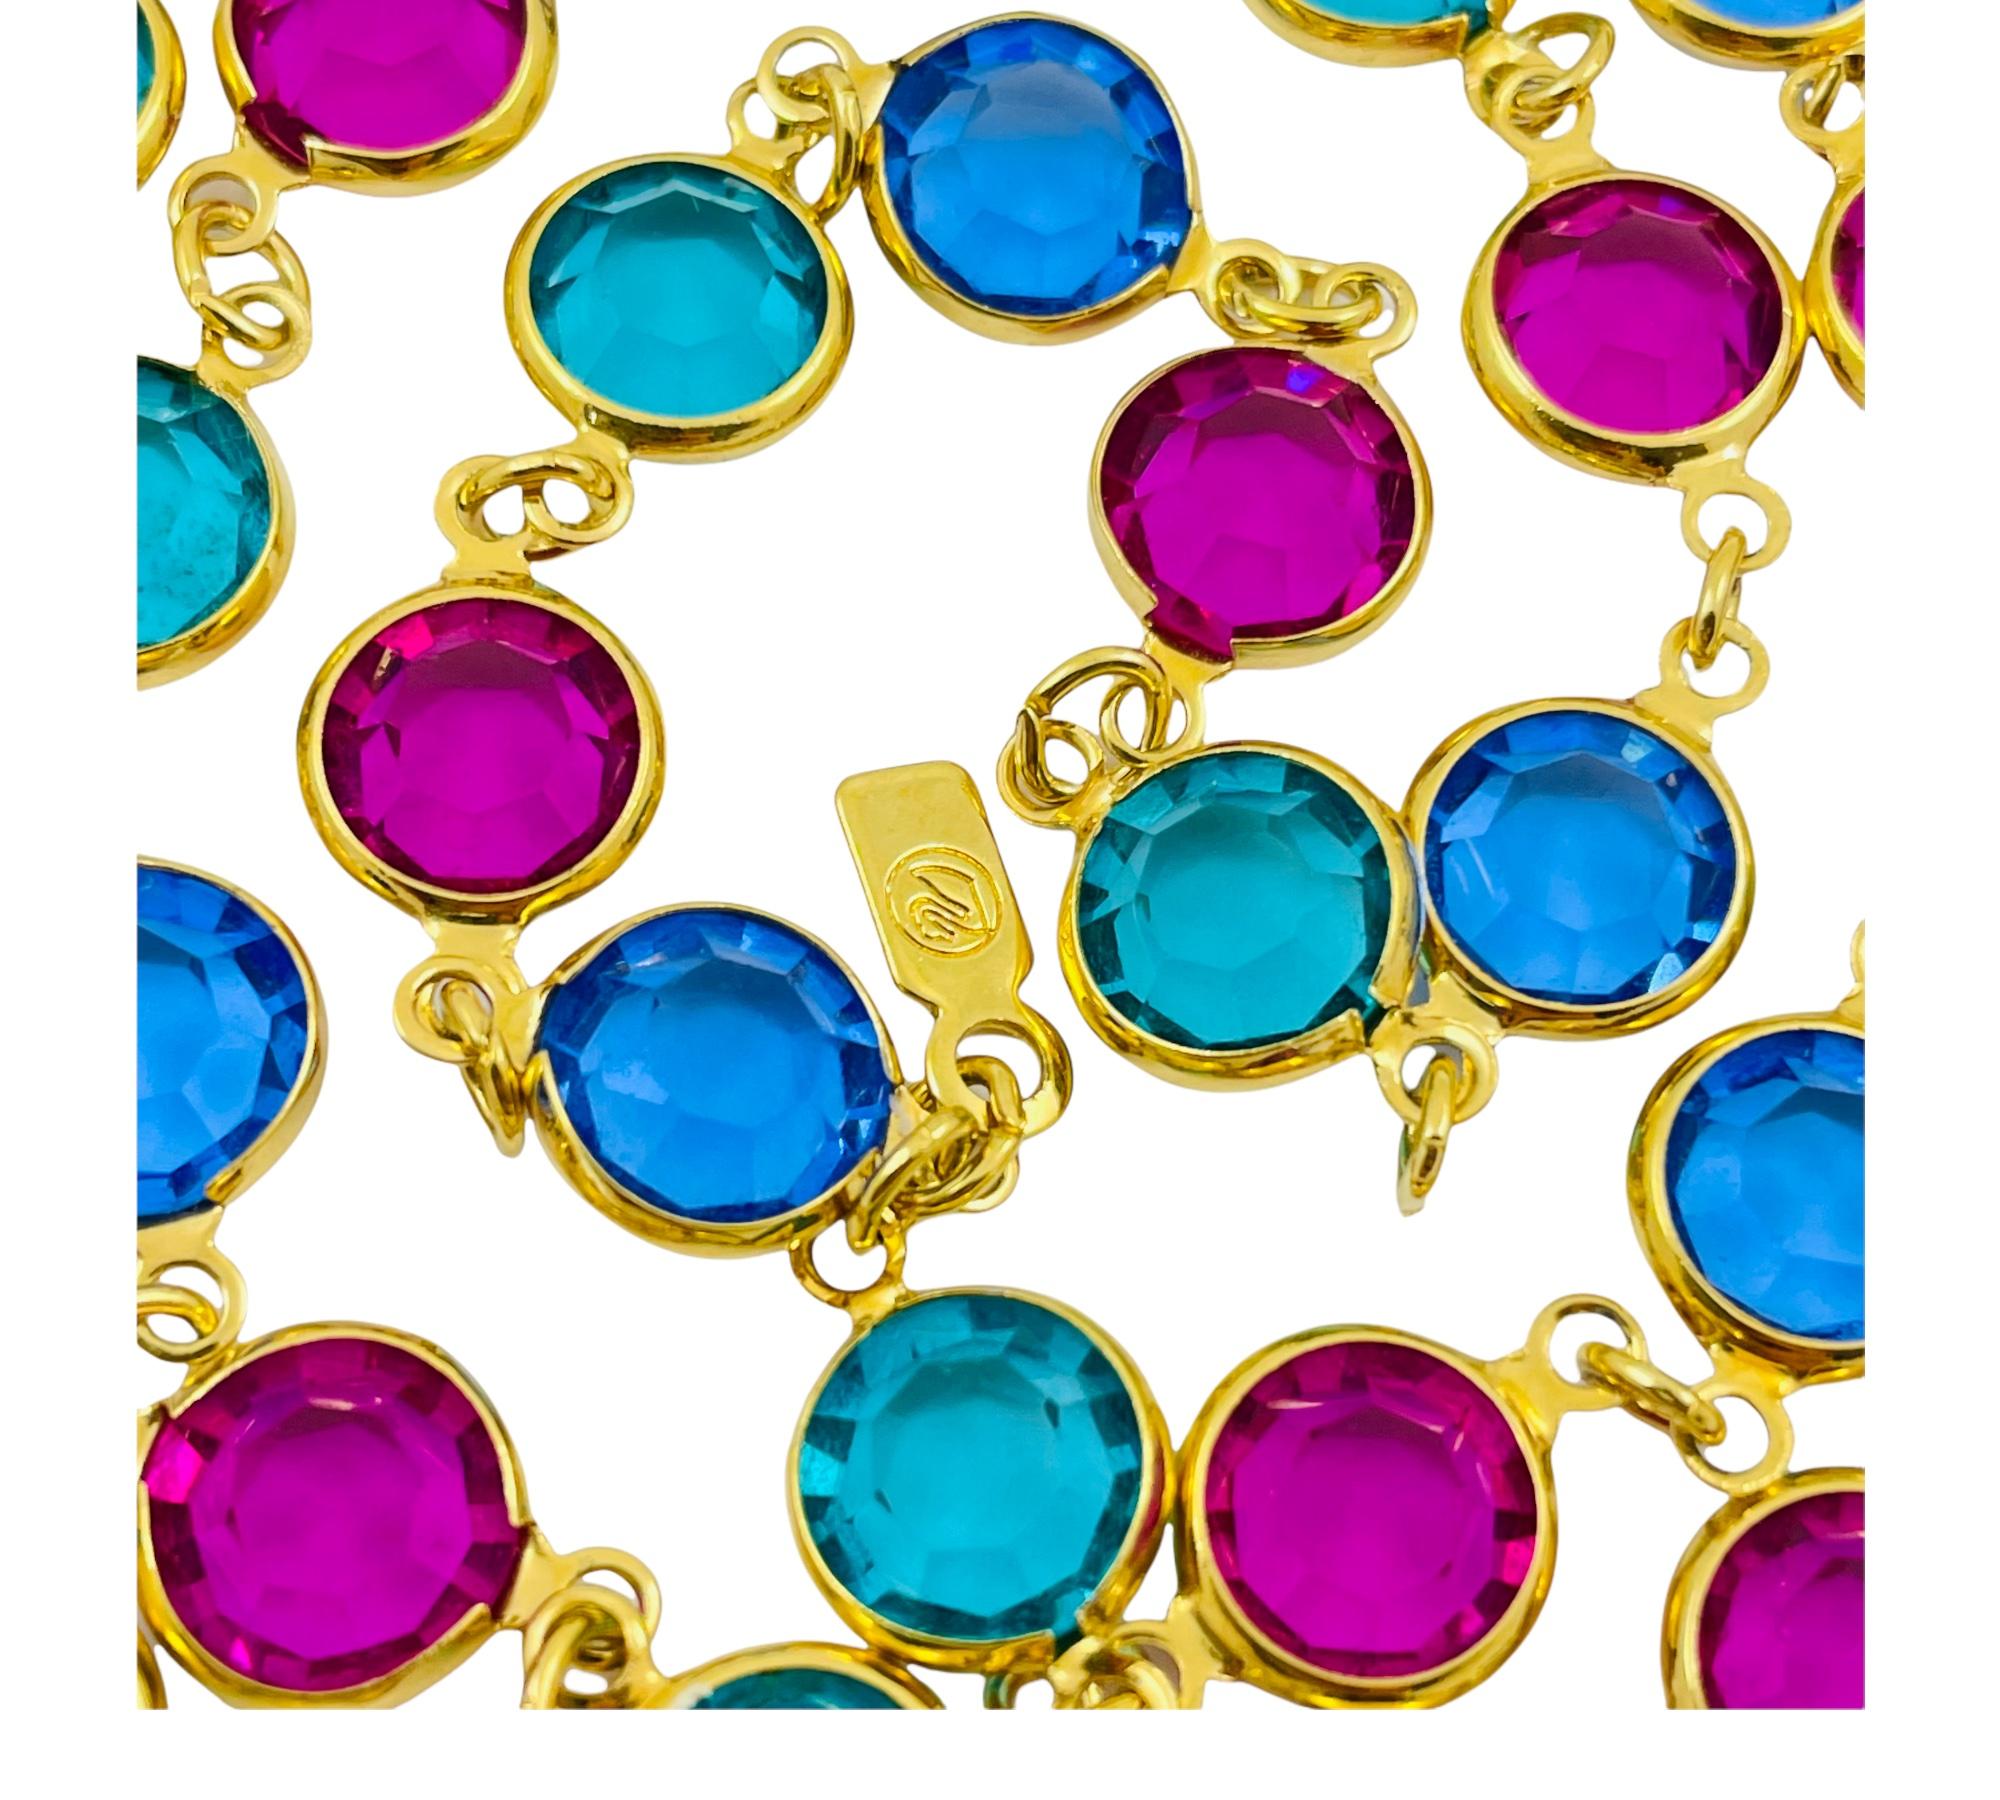 DETAILS

• signed SWAROVSKI swan logo

• gold tone with crystals

• vintage designer runway chain necklace

MEASUREMENTS  

• 36” long by 0.31” wide

CONDITION

• excellent vintage condition with minimal signs of wear   

❤️❤️ VINTAGE DESIGNER